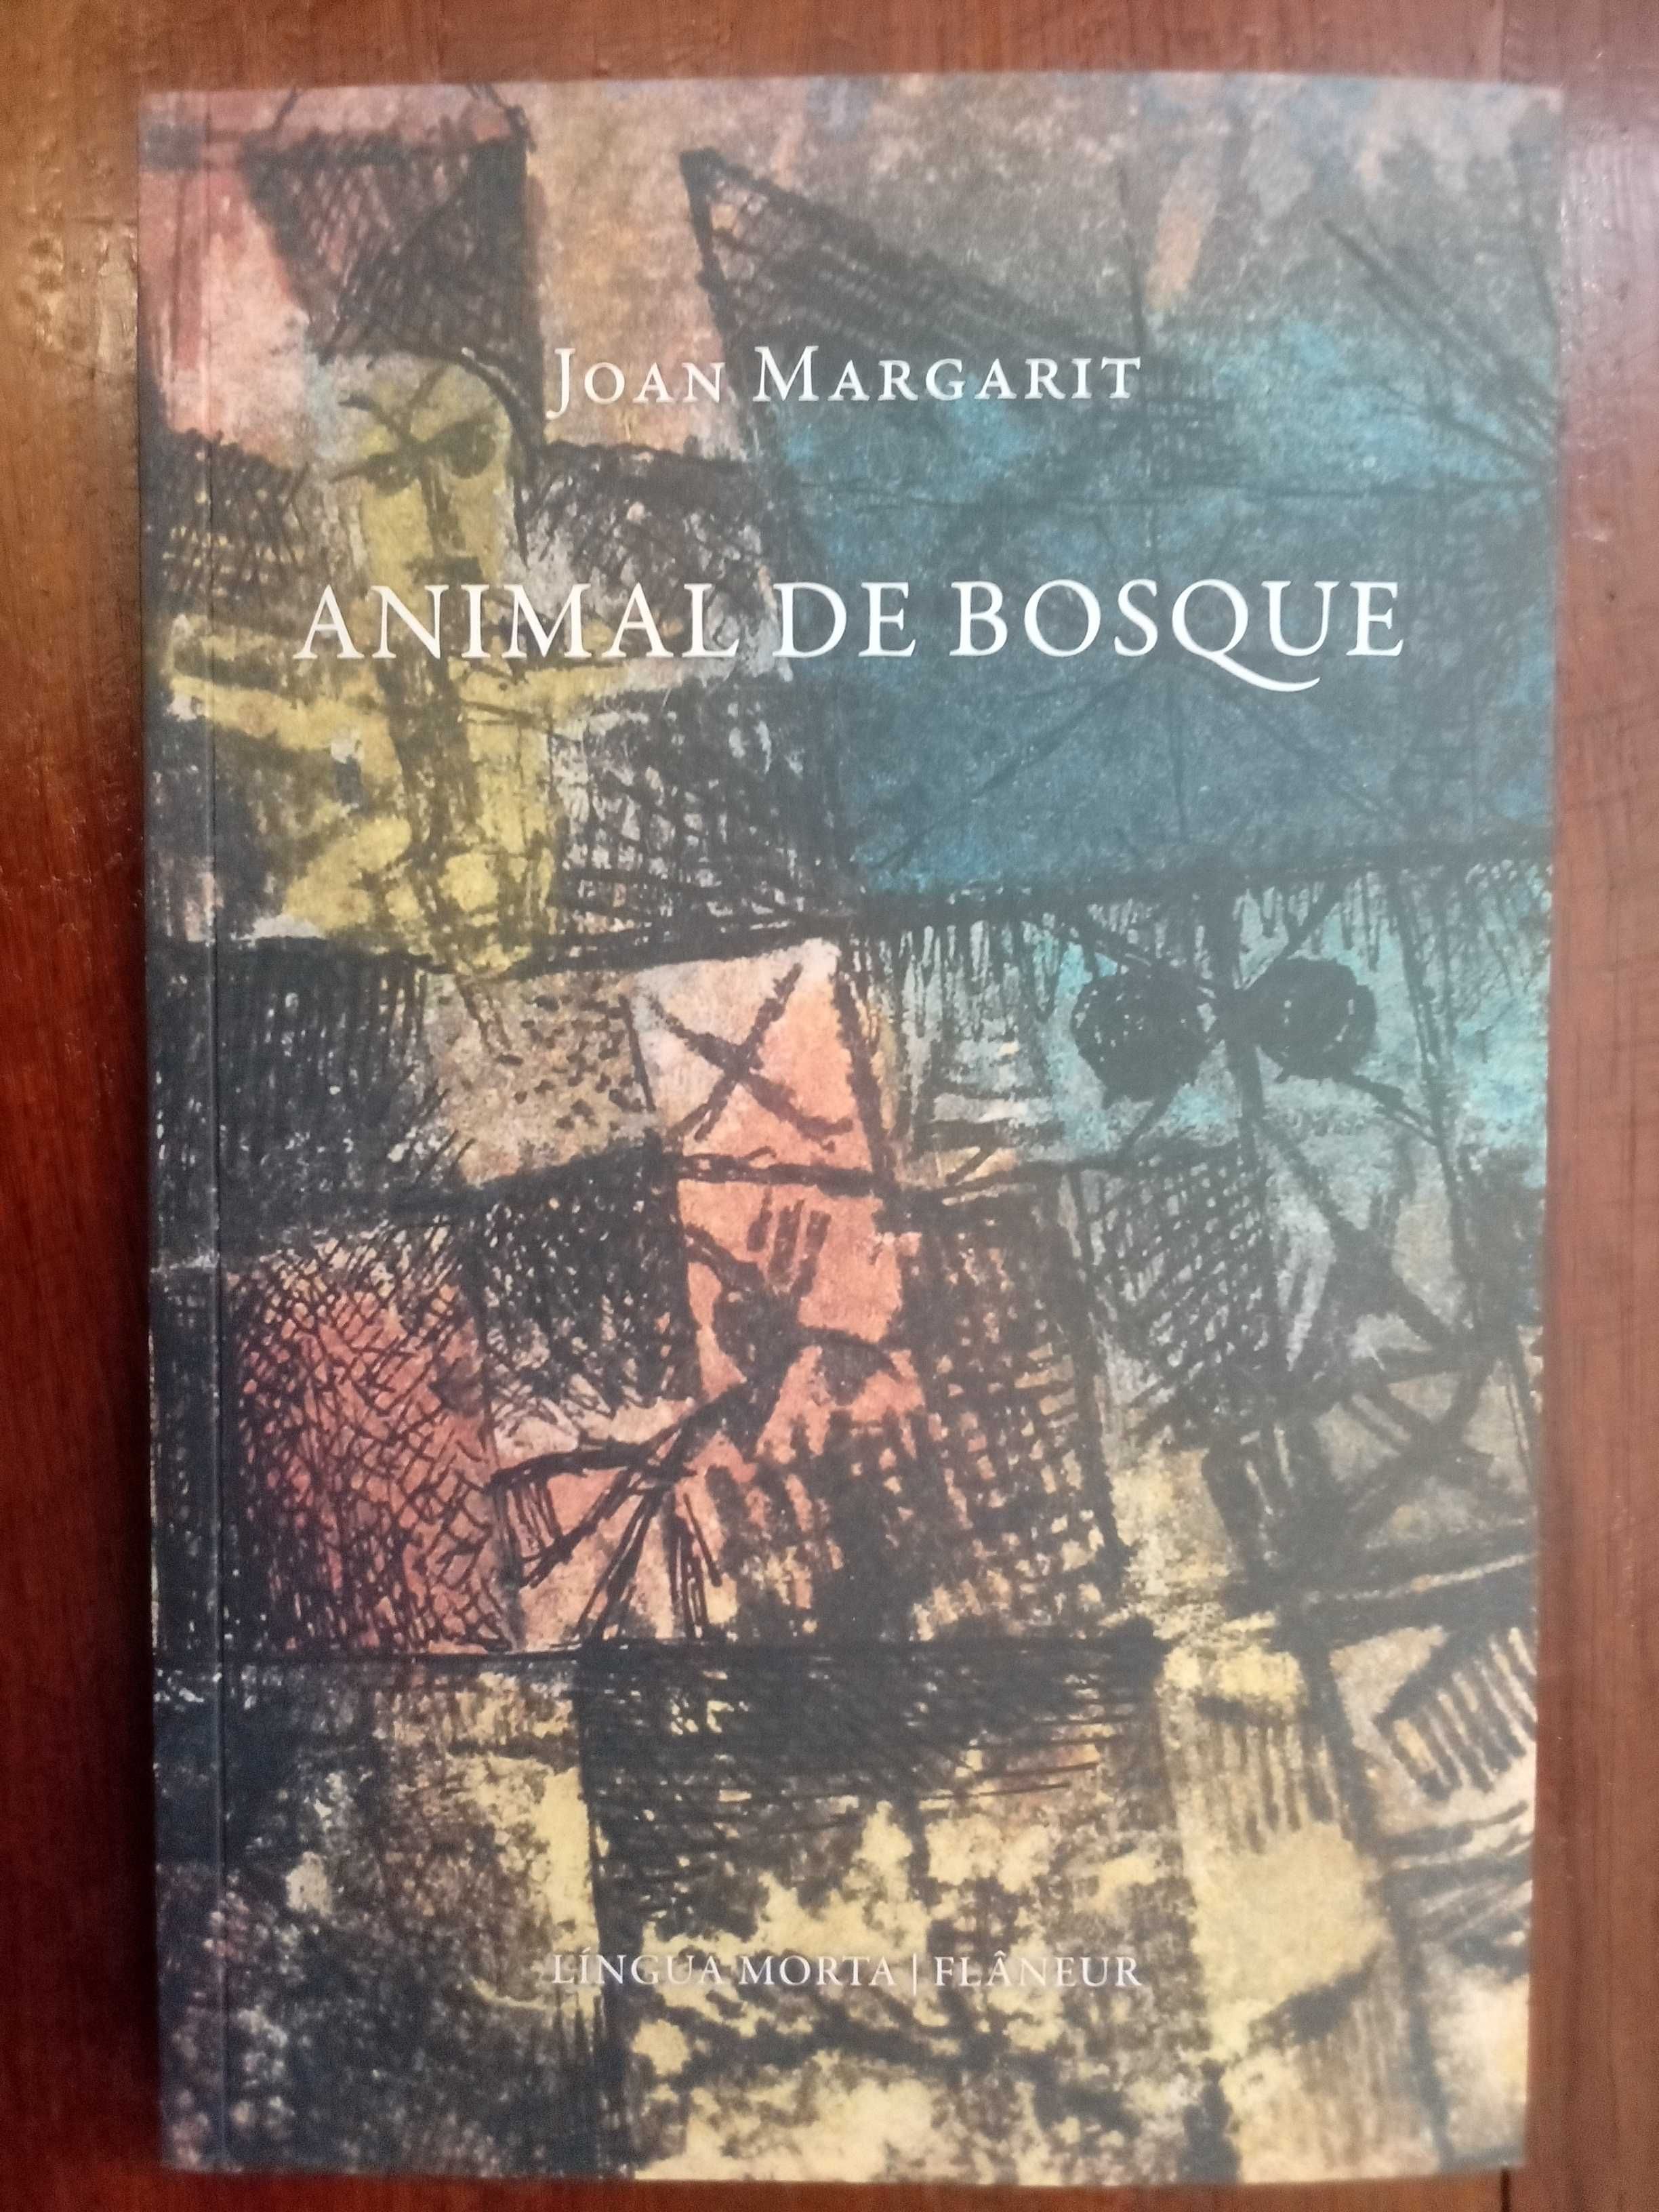 Joan Margarit - Animal de bosque